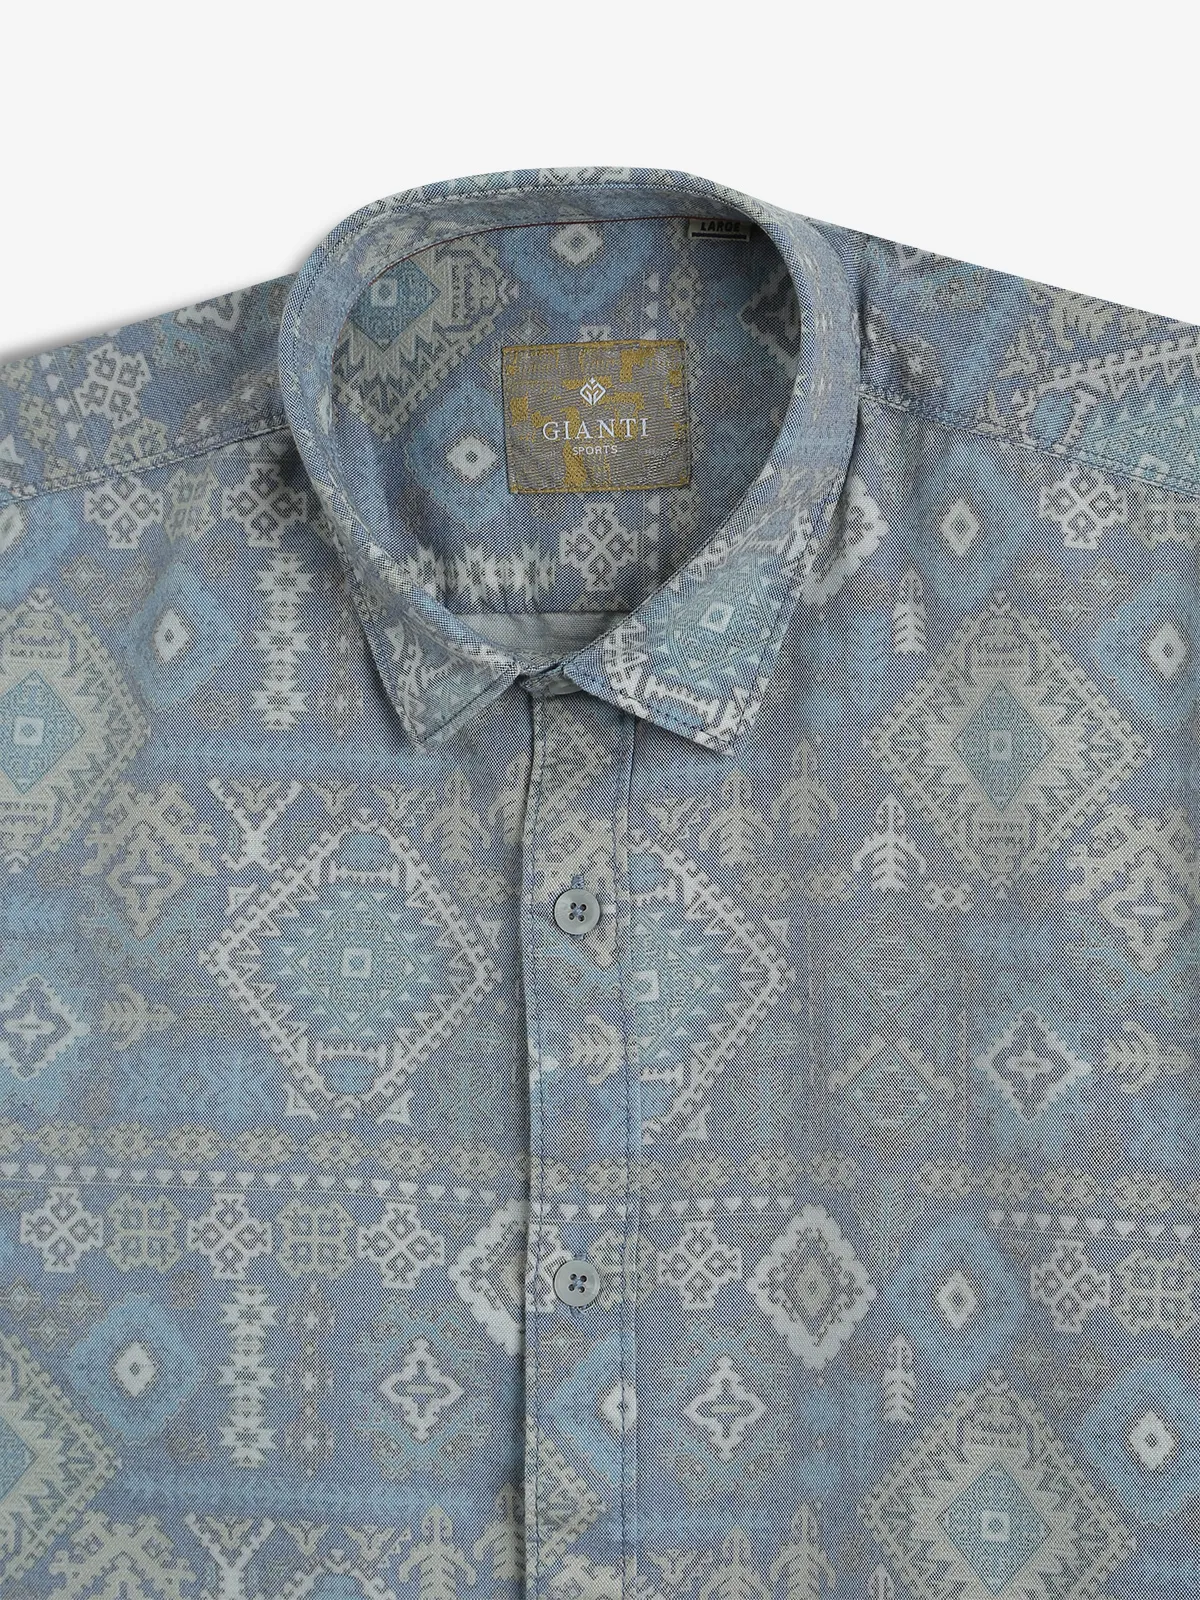 GIANTI printed blue cotton casual shirt